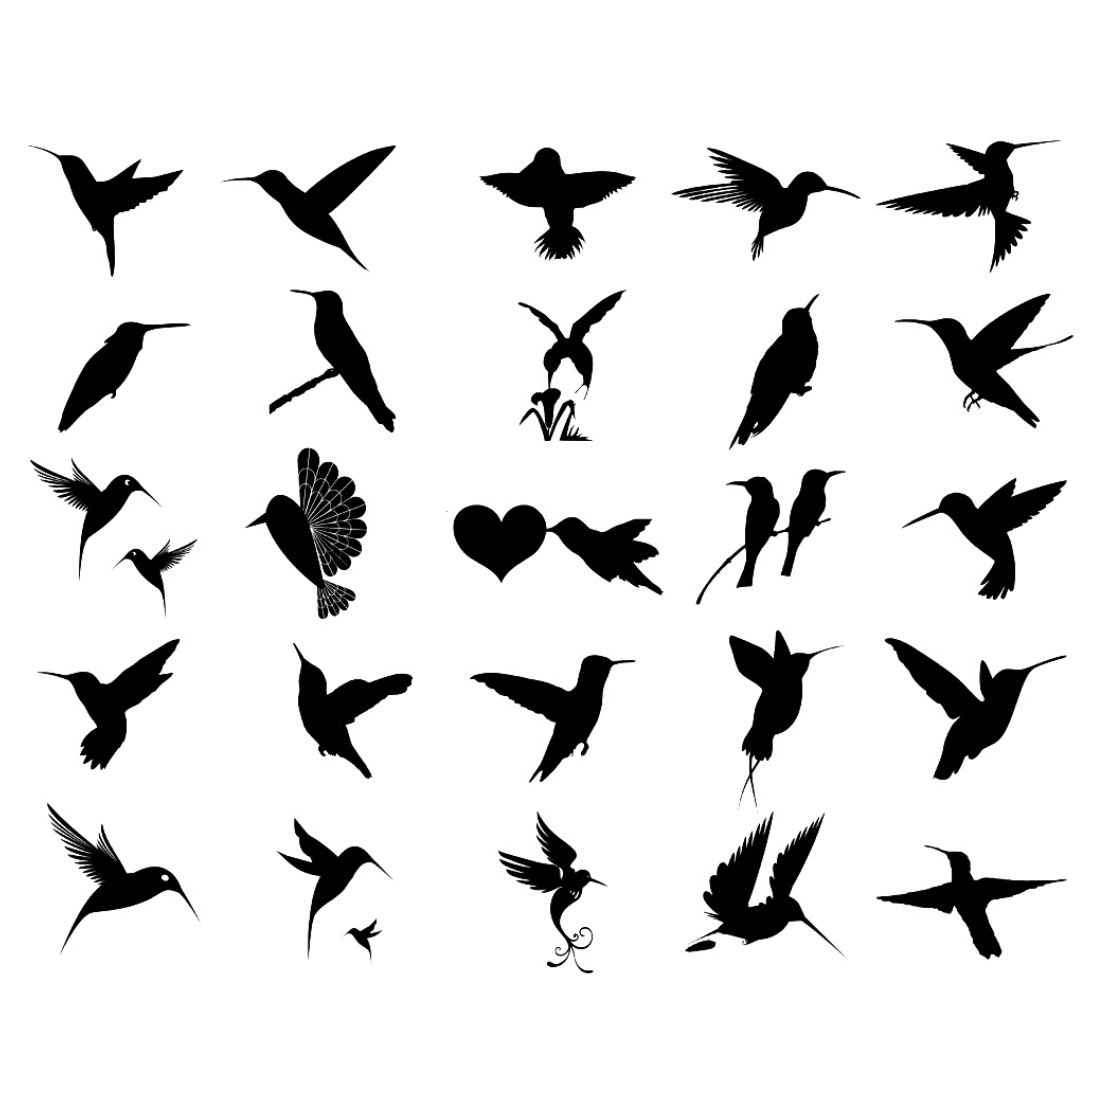 Hummingbird Silhouette Bundles cover image.